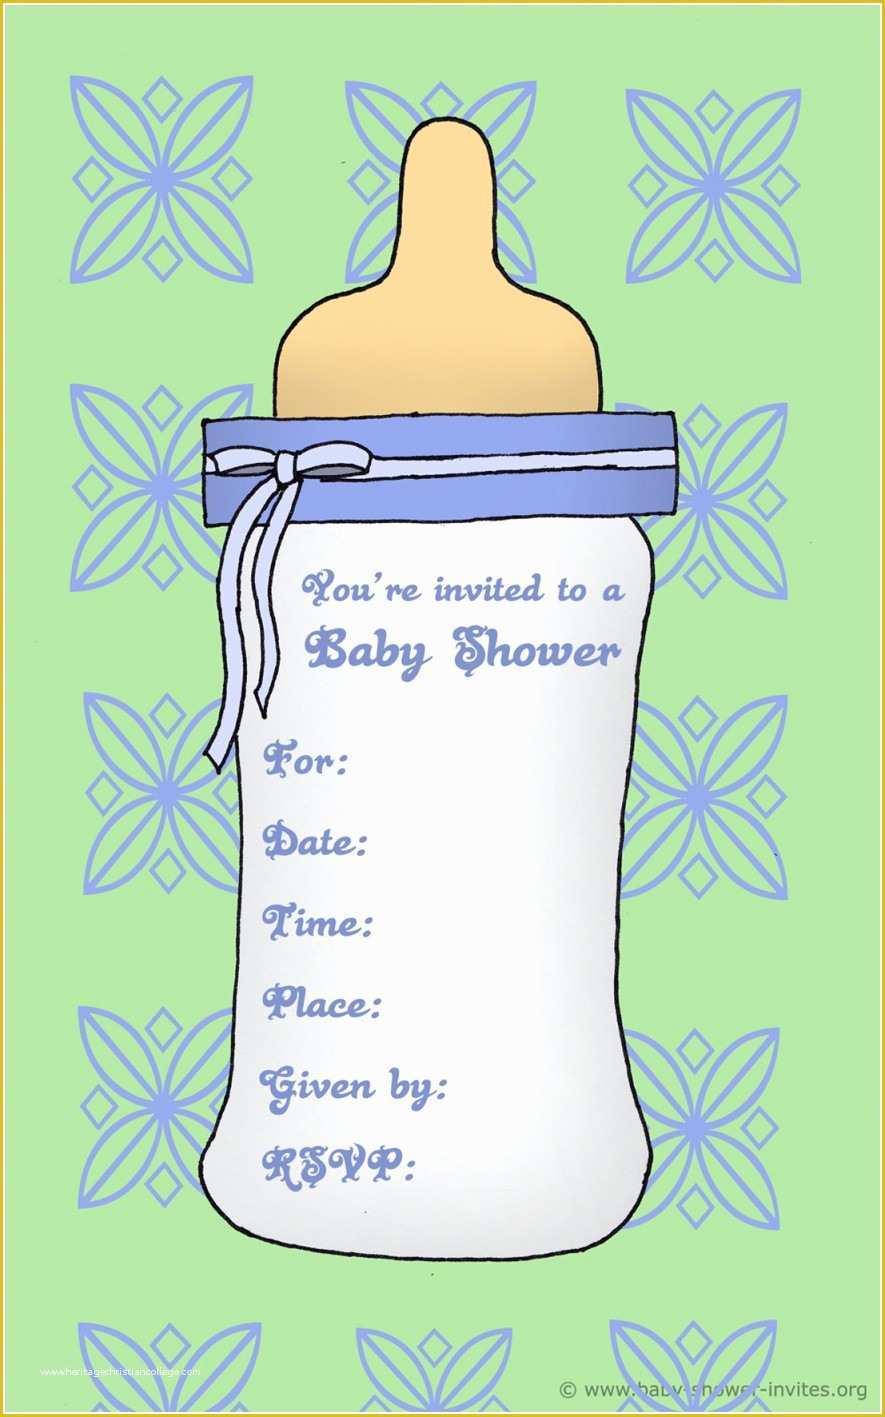 Free Editable Baby Shower Invitation Templates Of New Baby Shower Invitations for Boy Free Templates